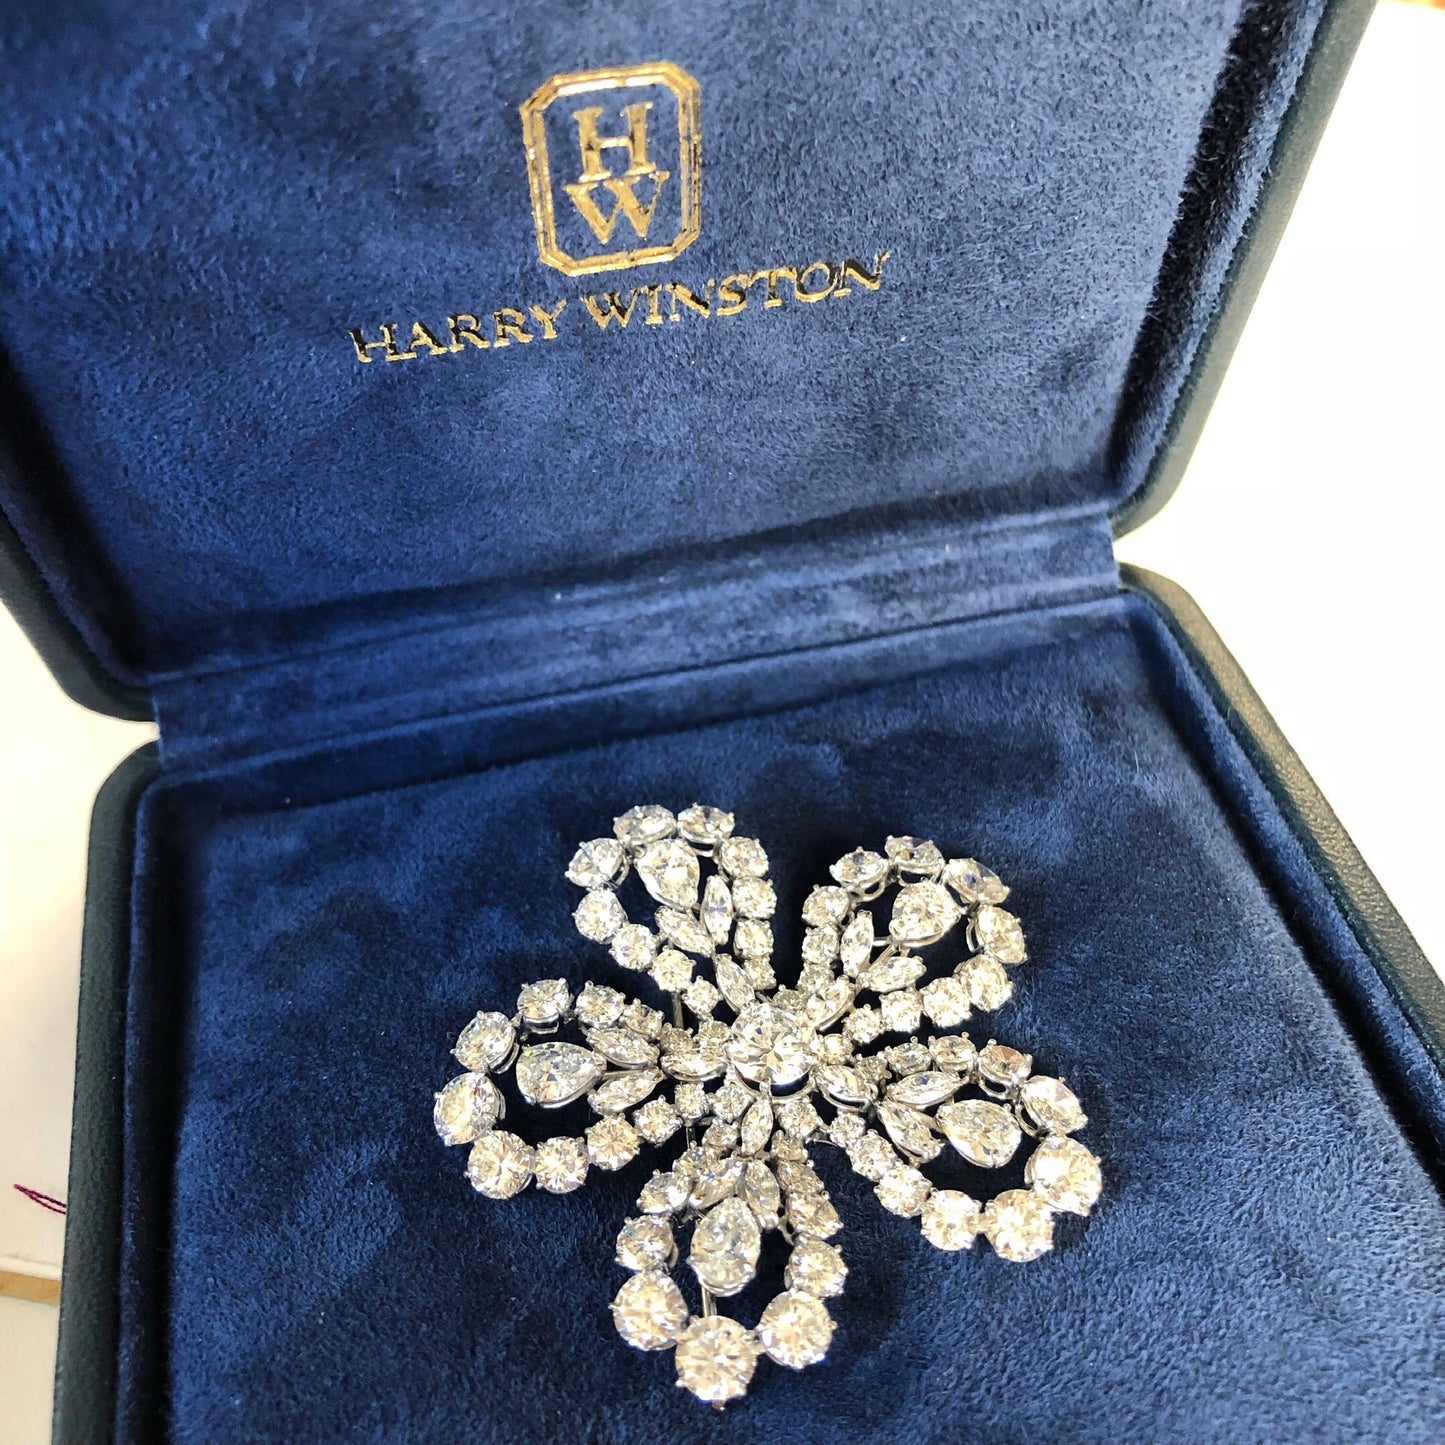 Harry Winston 1950s Platinum Diamond Brooch in jewelry box